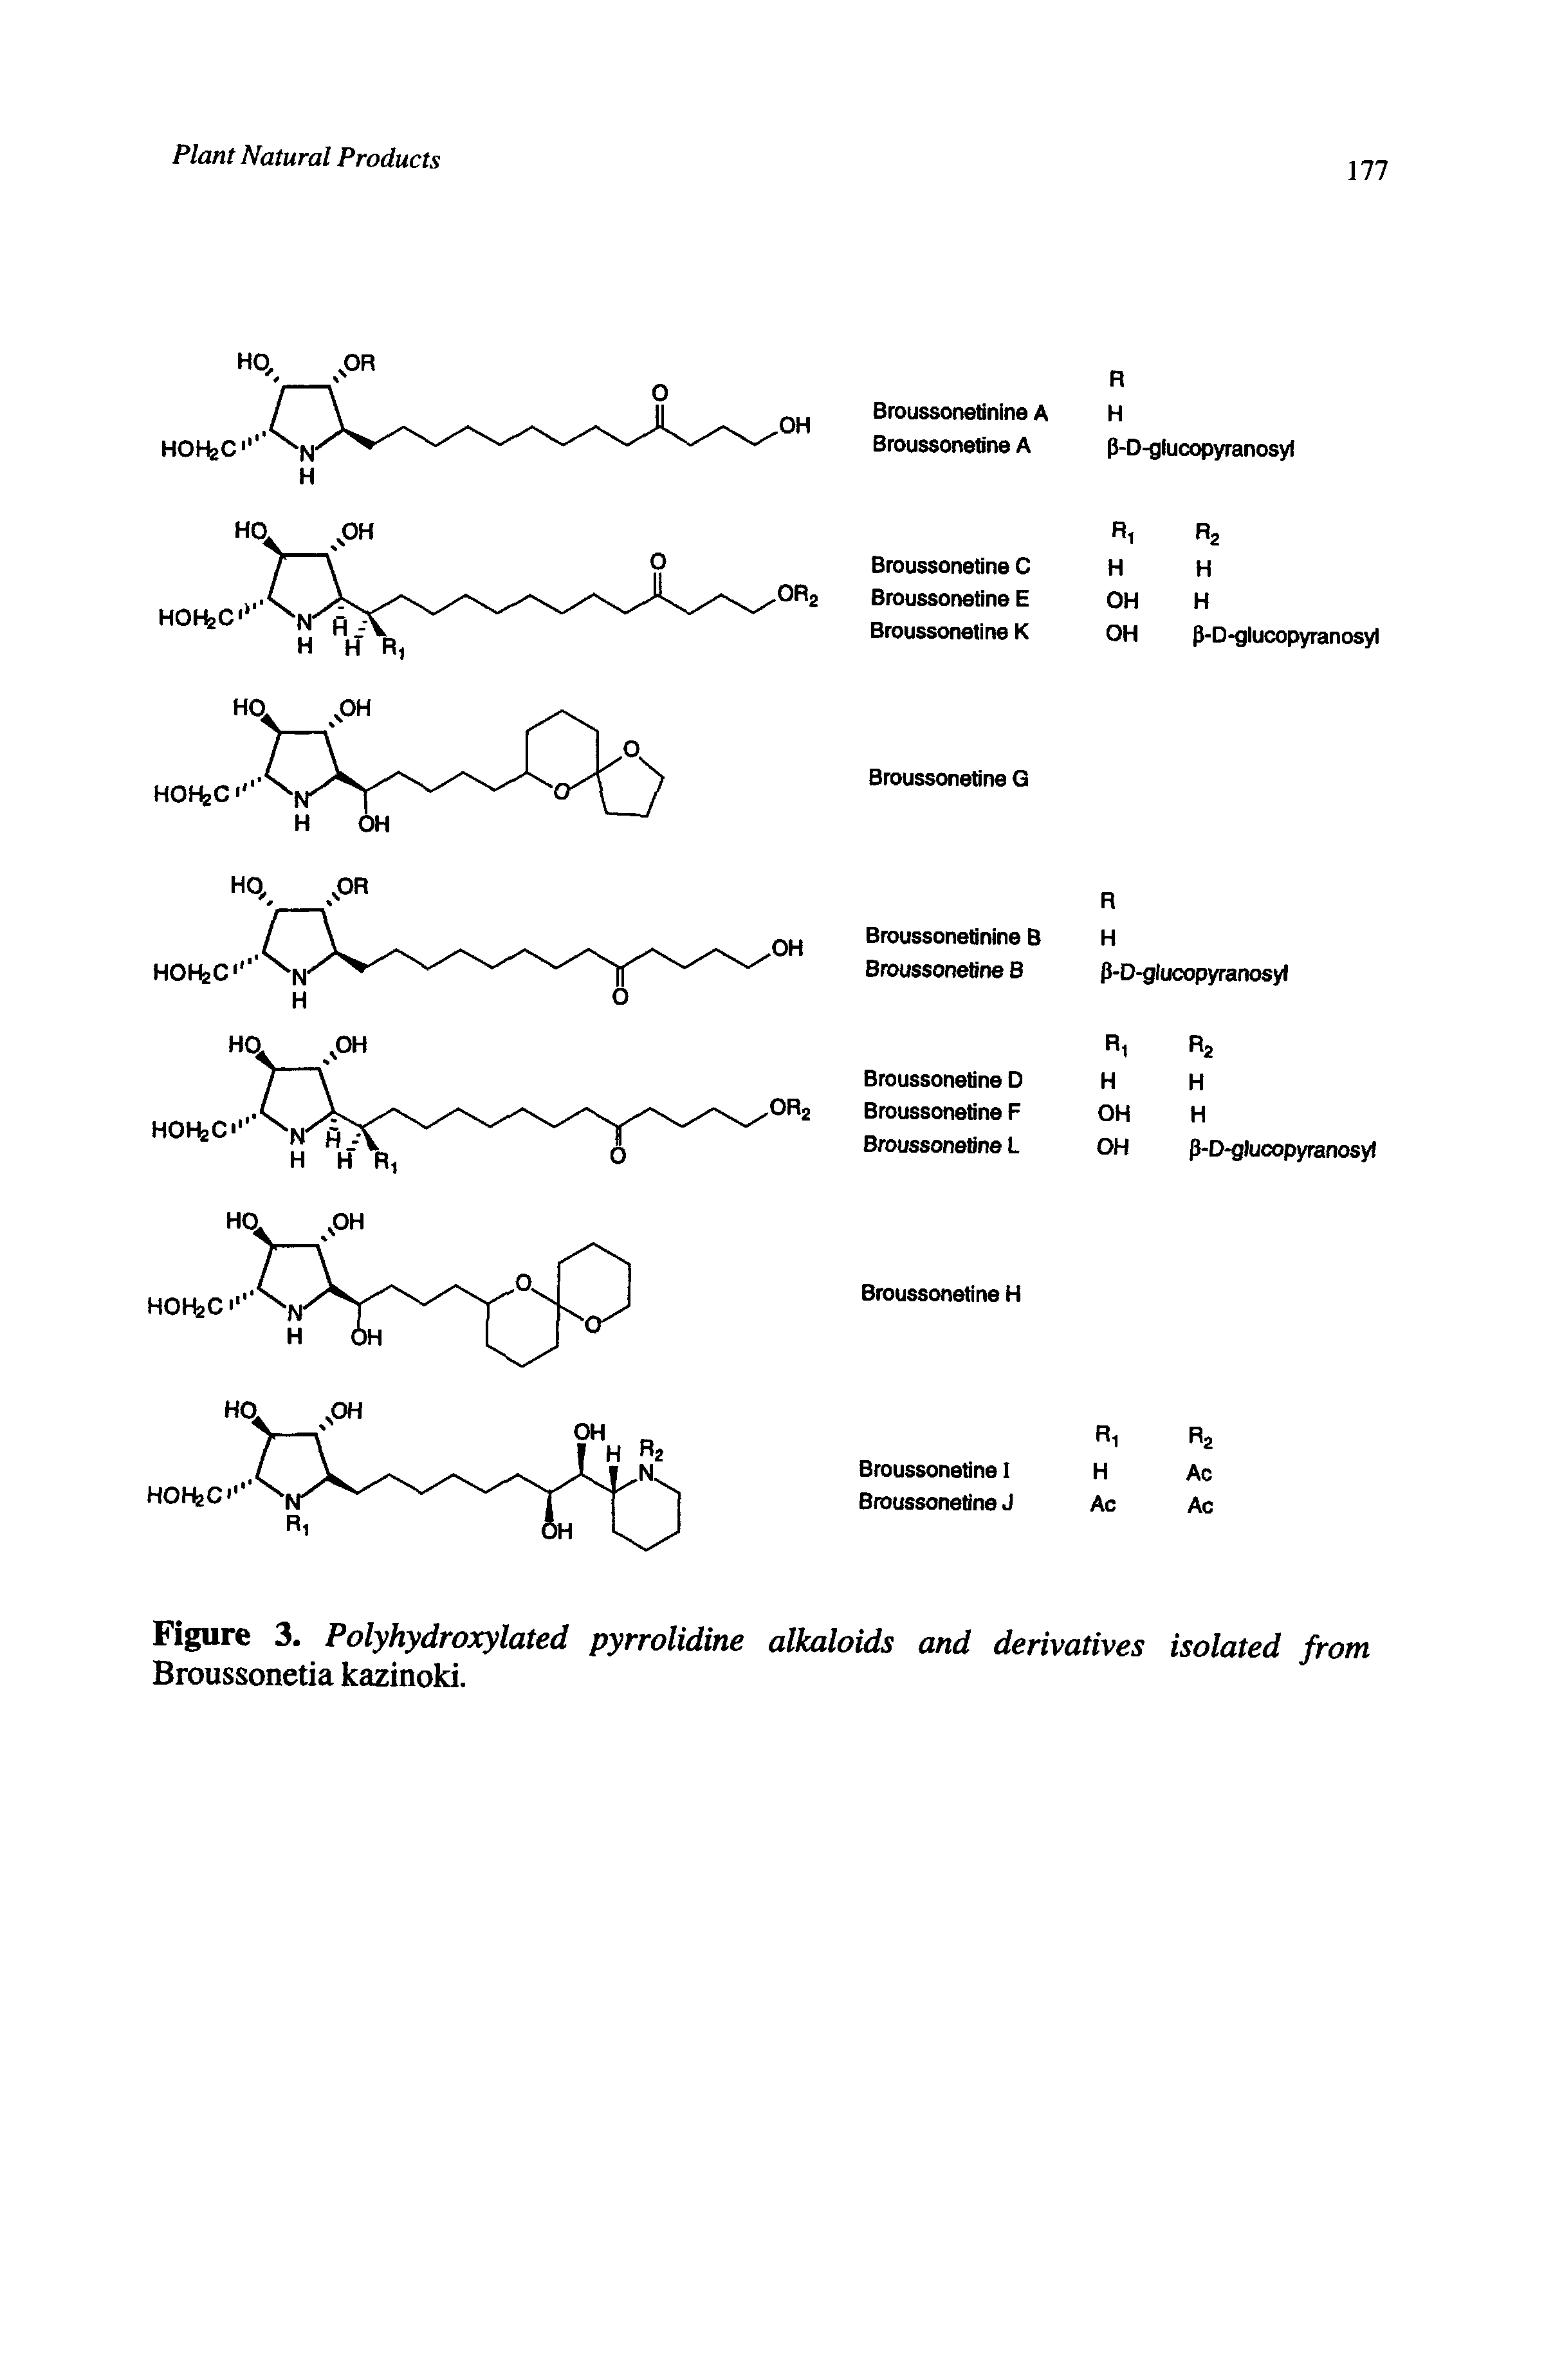 Figure 3. Polyhydroxylated pyrrolidine alkaloids and derivatives isolated from Broussonetia kazinoki.